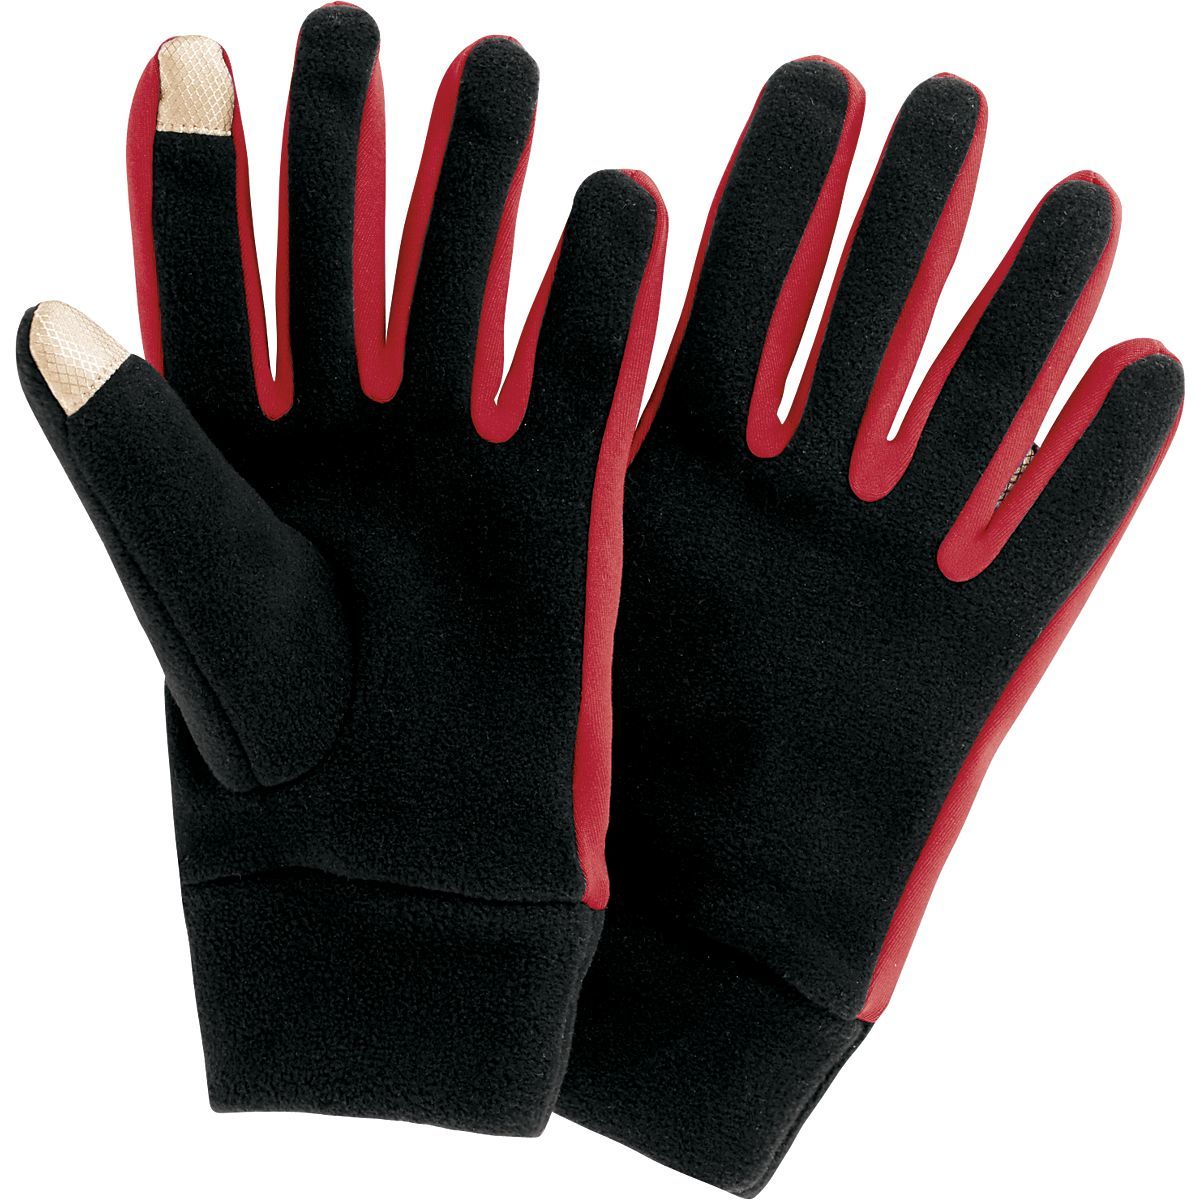 Holloway Bolster Gloves in Black/Scarlet  -Part of the Accessories, Accessories-Gloves, Holloway product lines at KanaleyCreations.com